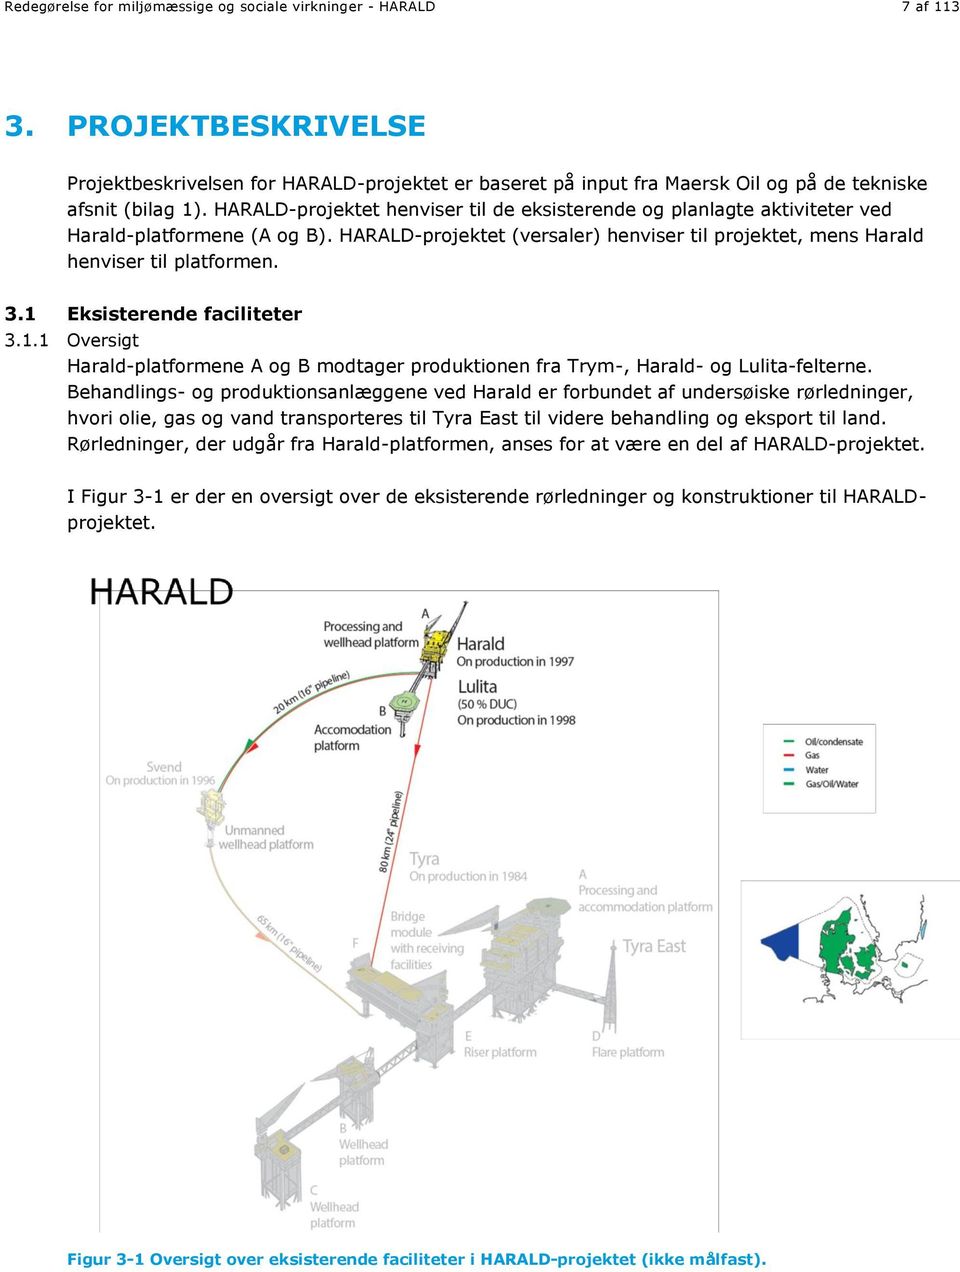 HARALD-projektet henviser til de eksisterende og planlagte aktiviteter ved Harald-platformene (A og B). HARALD-projektet (versaler) henviser til projektet, mens Harald henviser til platformen. 3.